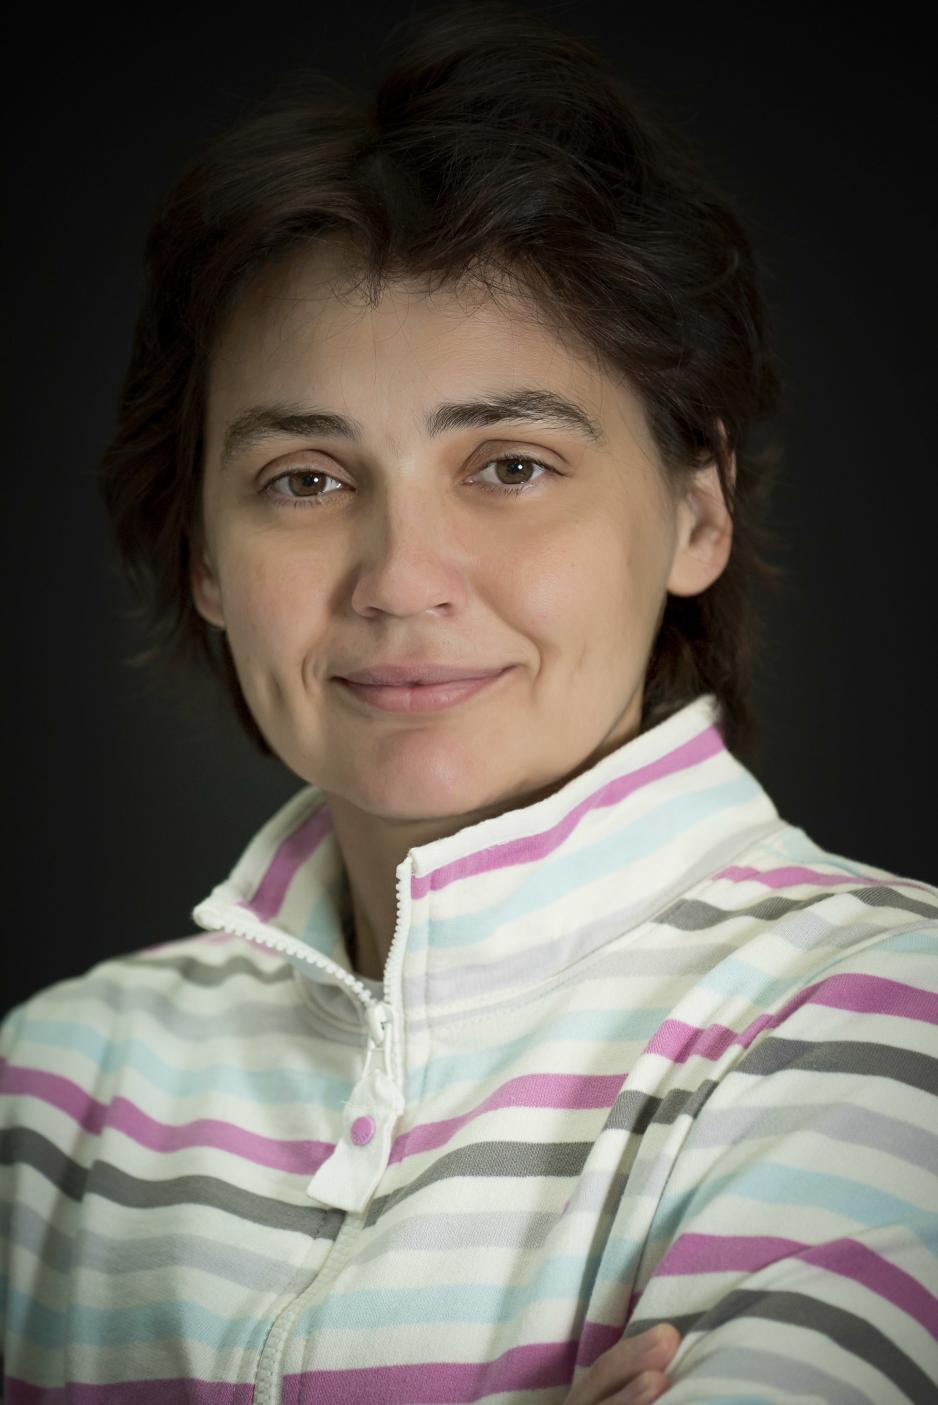 AWI climatologist Dr Monica Ionita